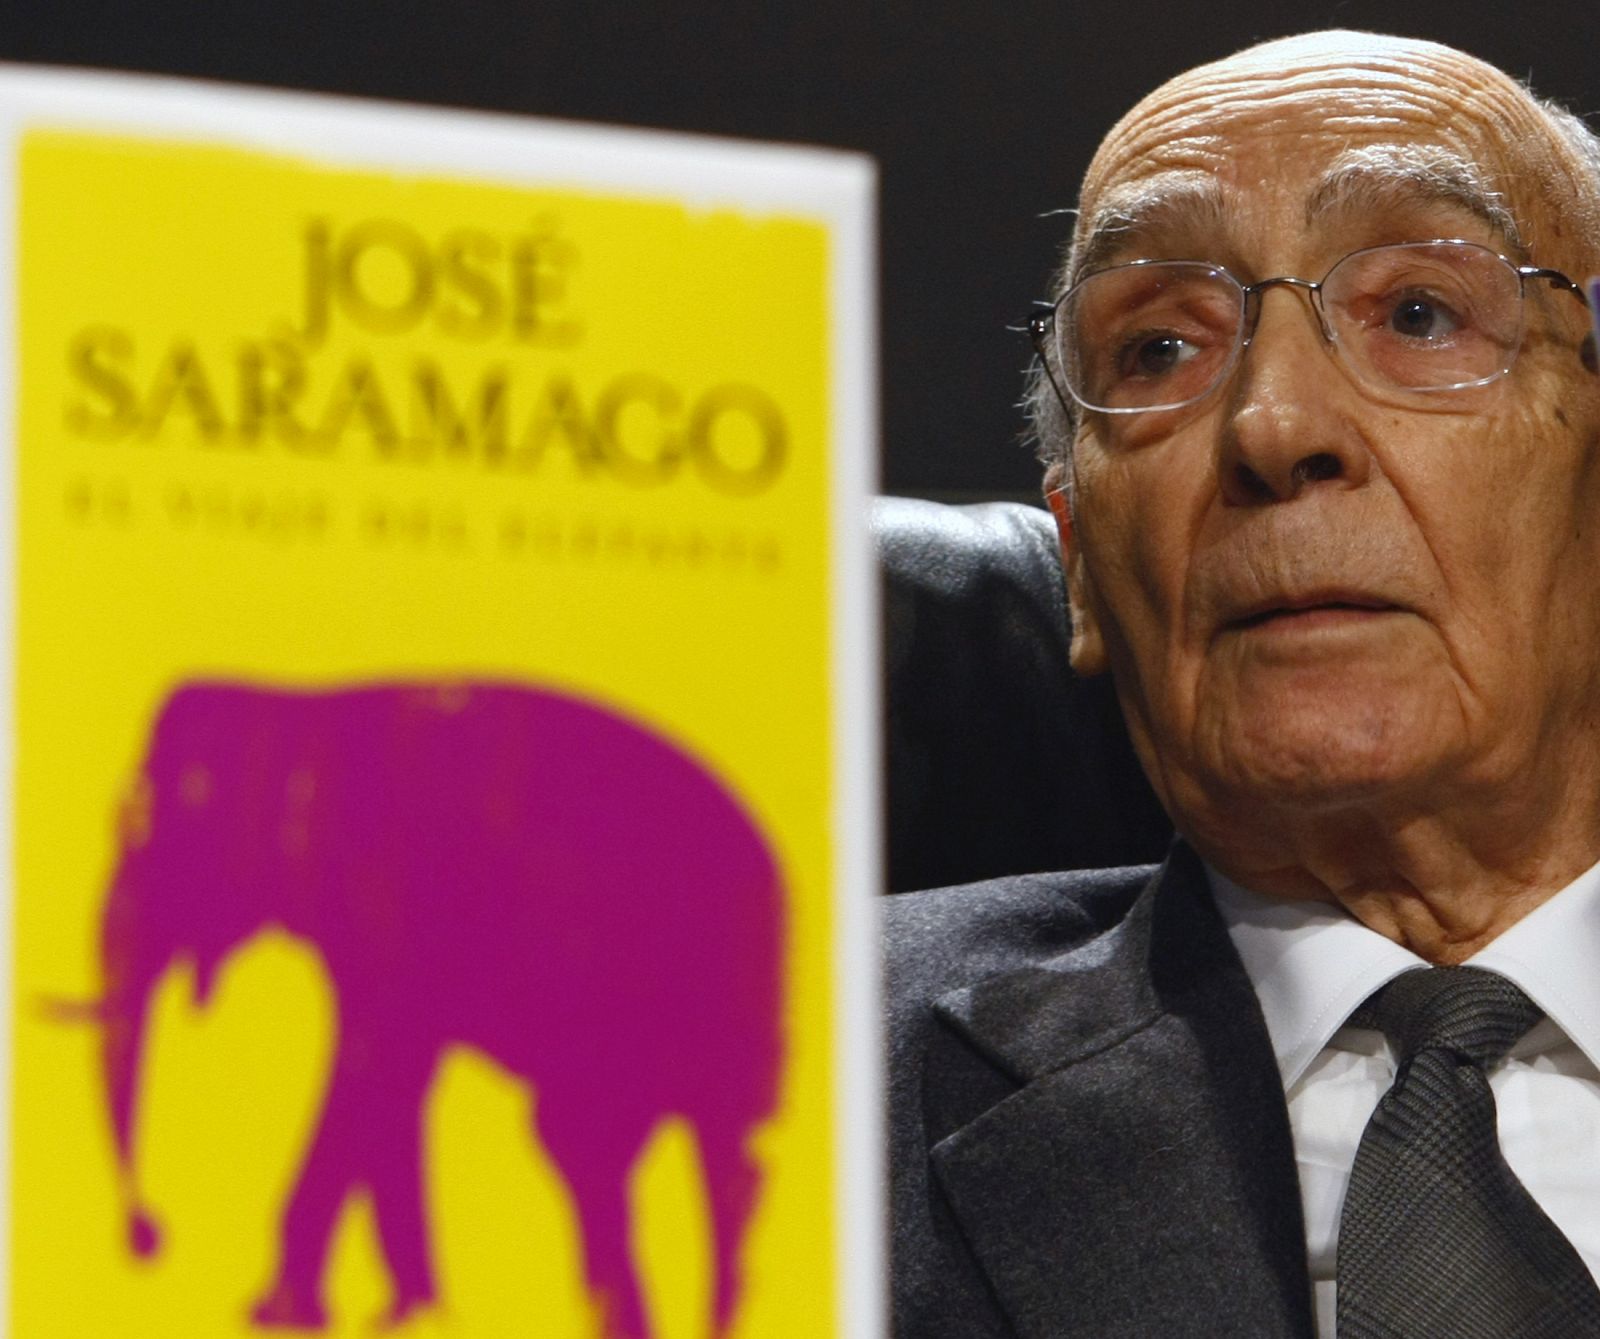 Portuguese Nobel Literature laureate Jose Saramago speaks during a news conference in Madrid